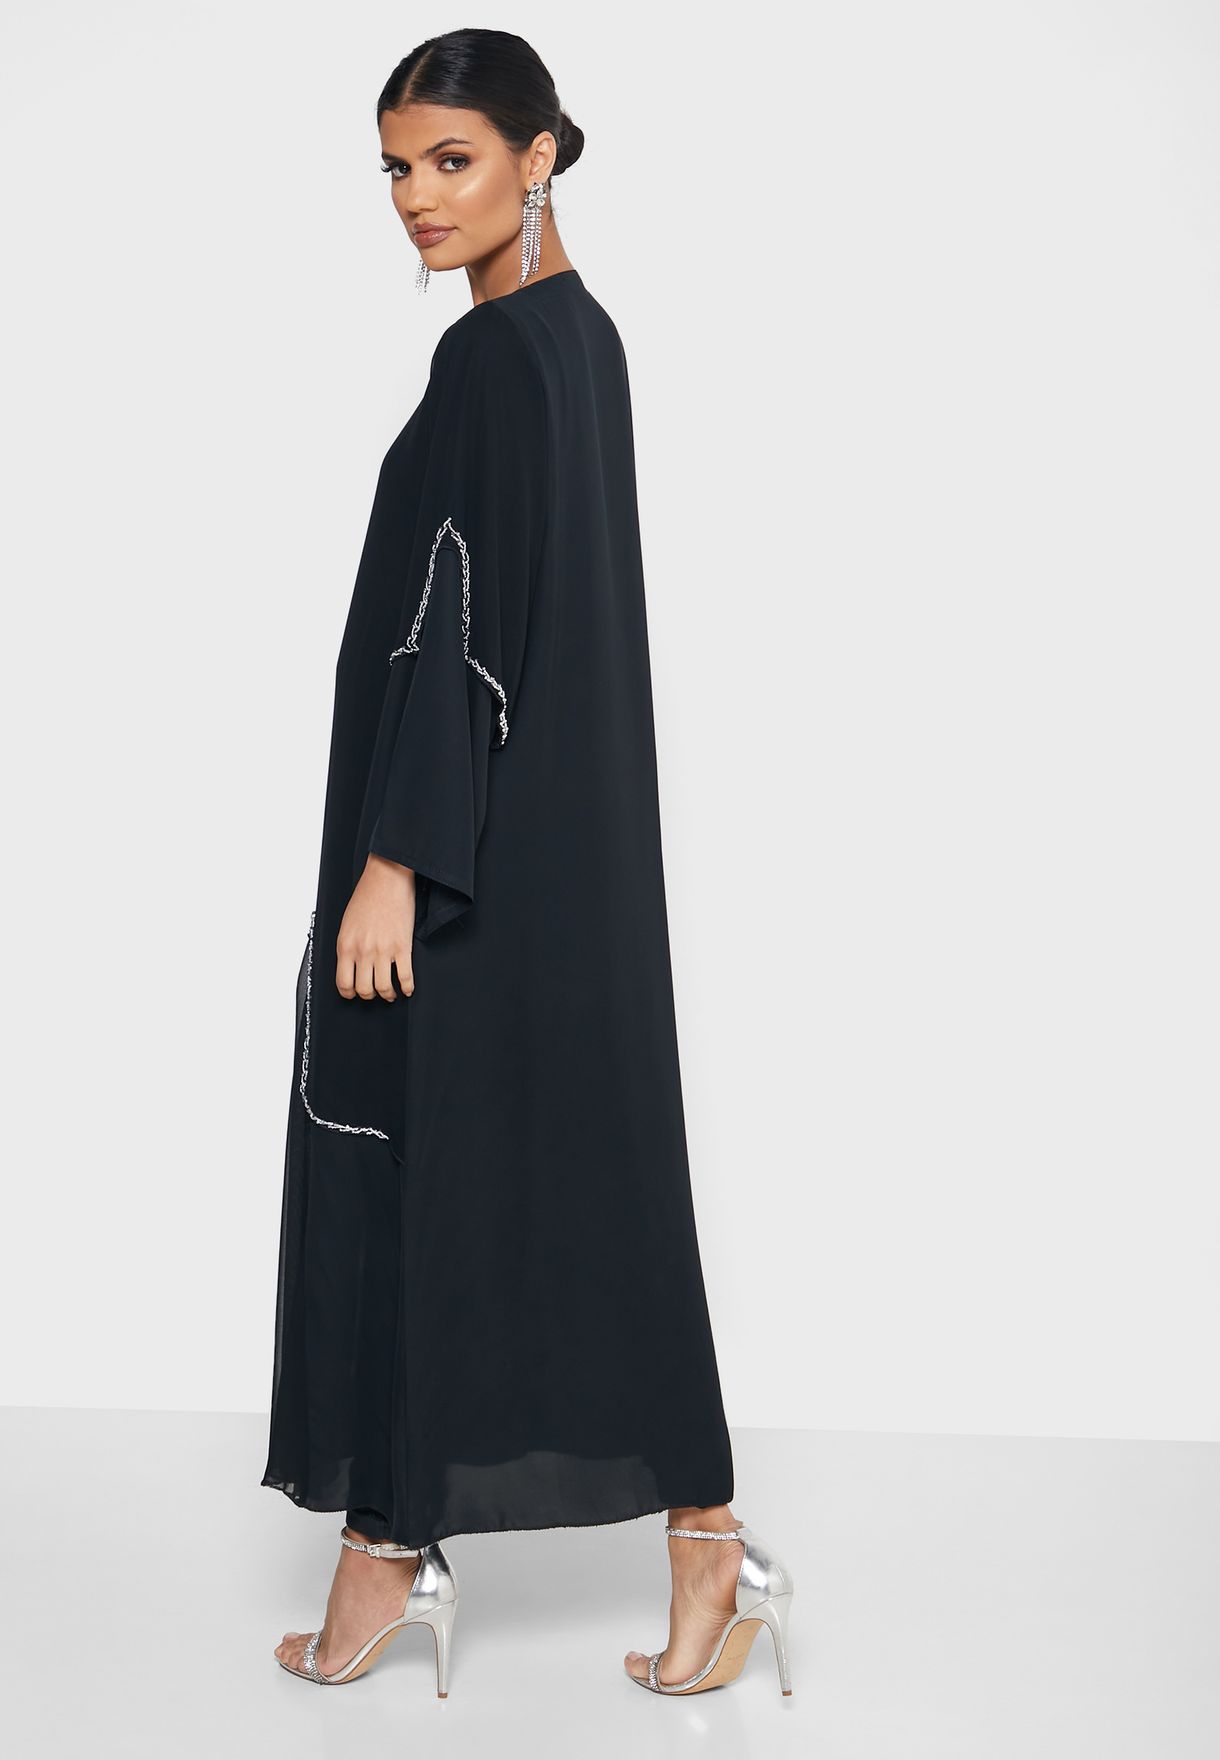 Buy Khizana black Embellished Abaya for Women in MENA, Worldwide